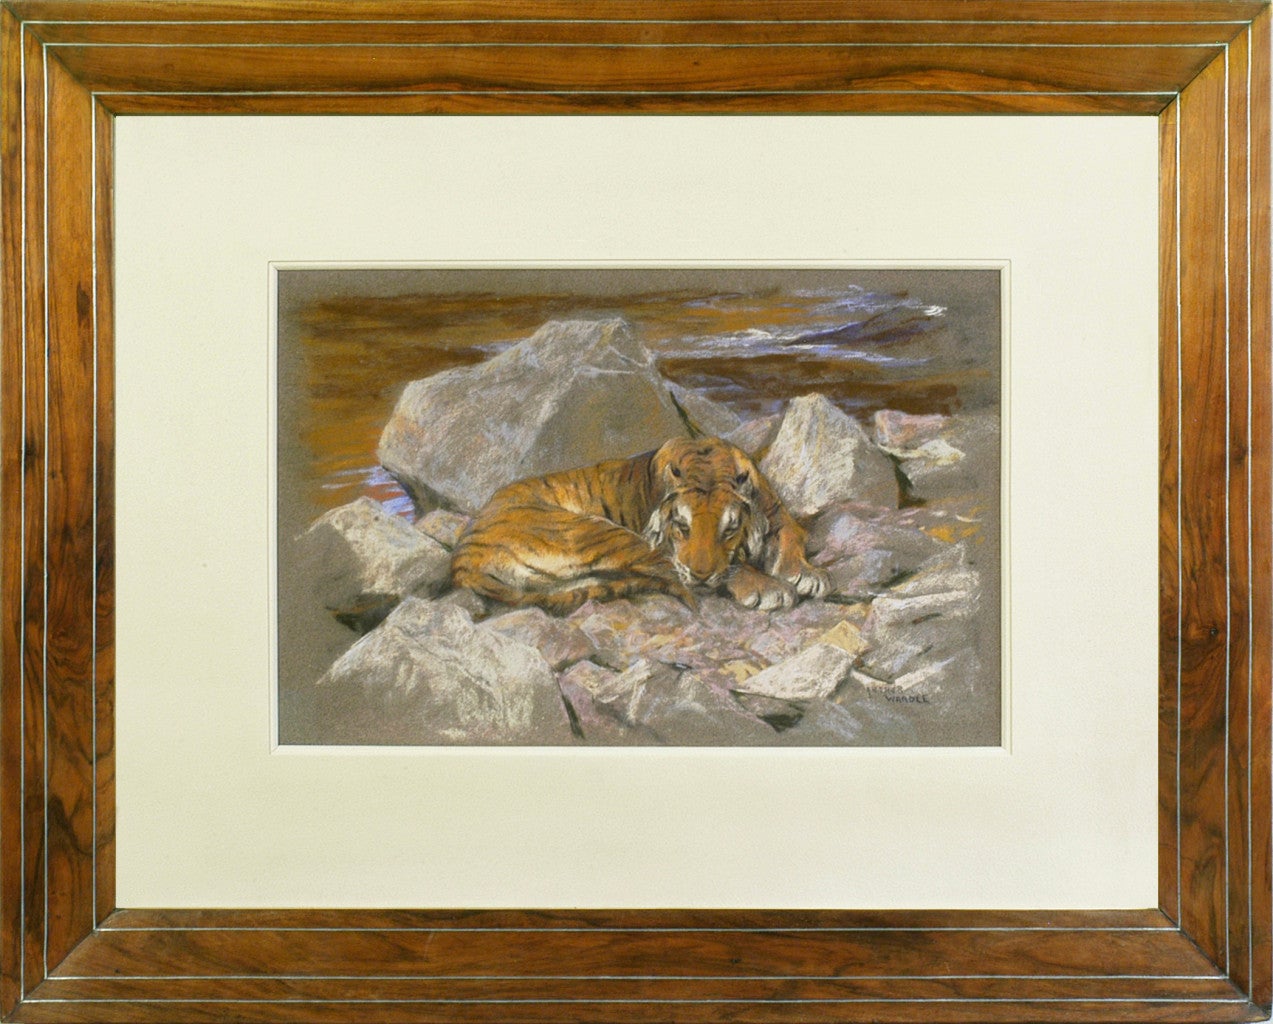 A tiger resting amongst rocks - Mixed Media Art by Arthur Wardle